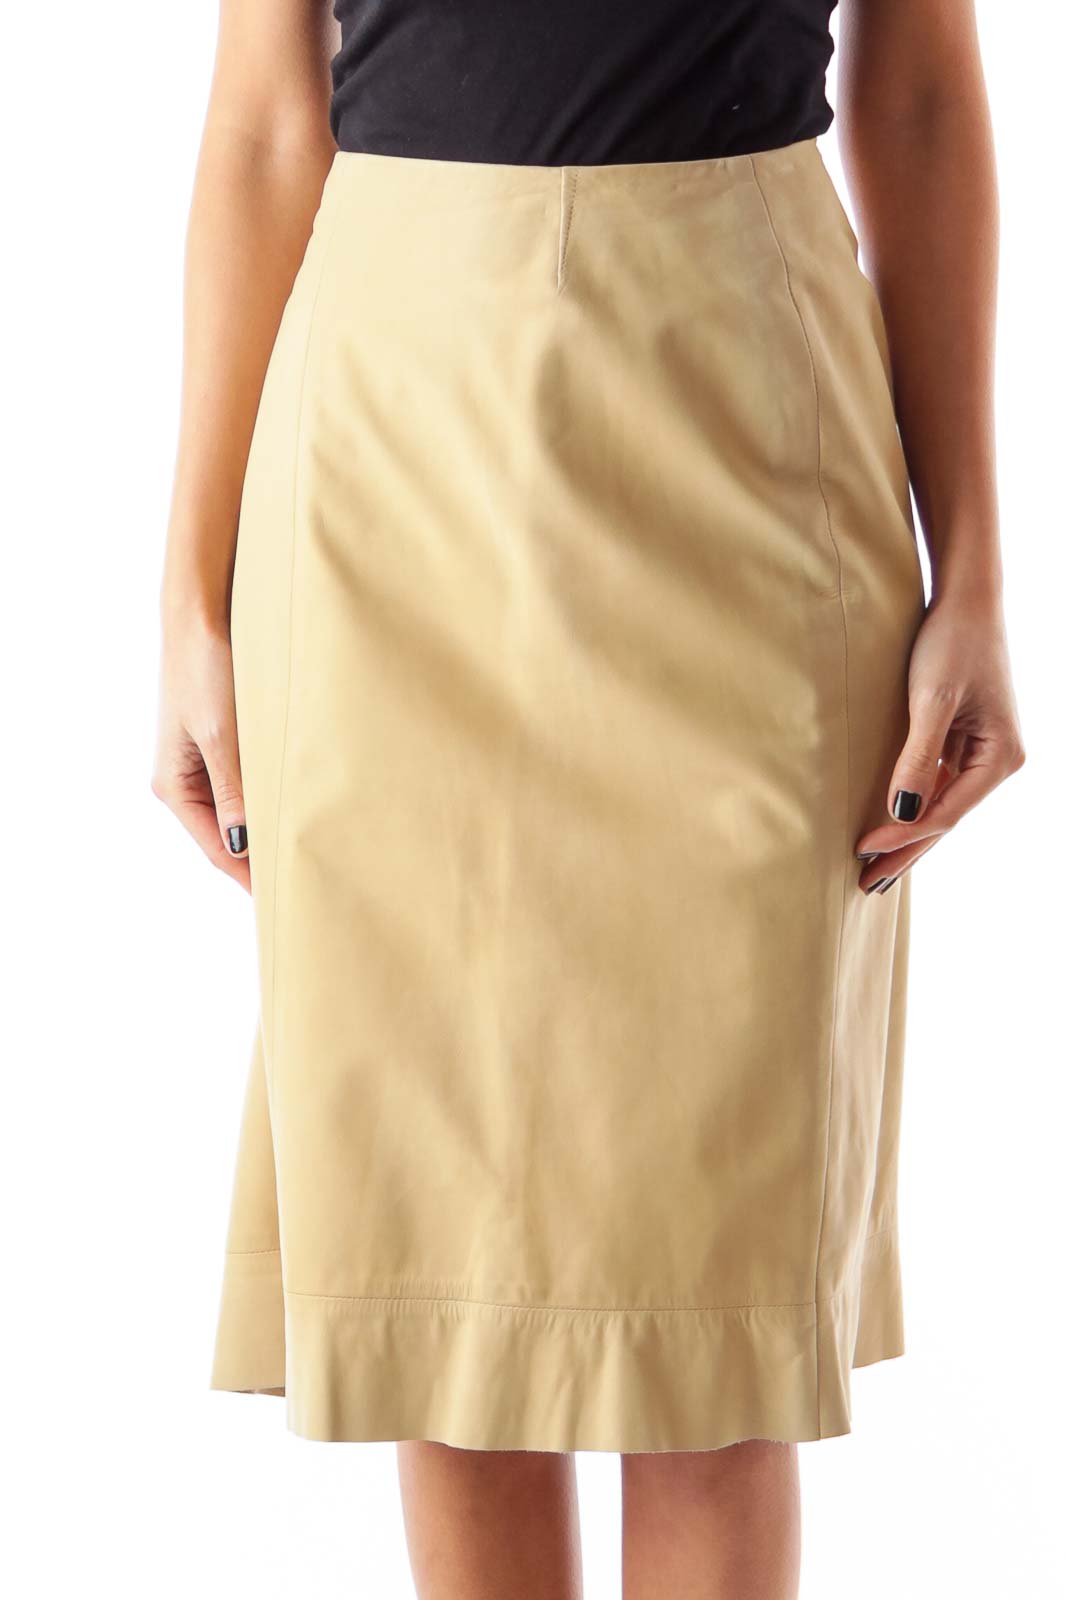 Cream A Line Skirt Front